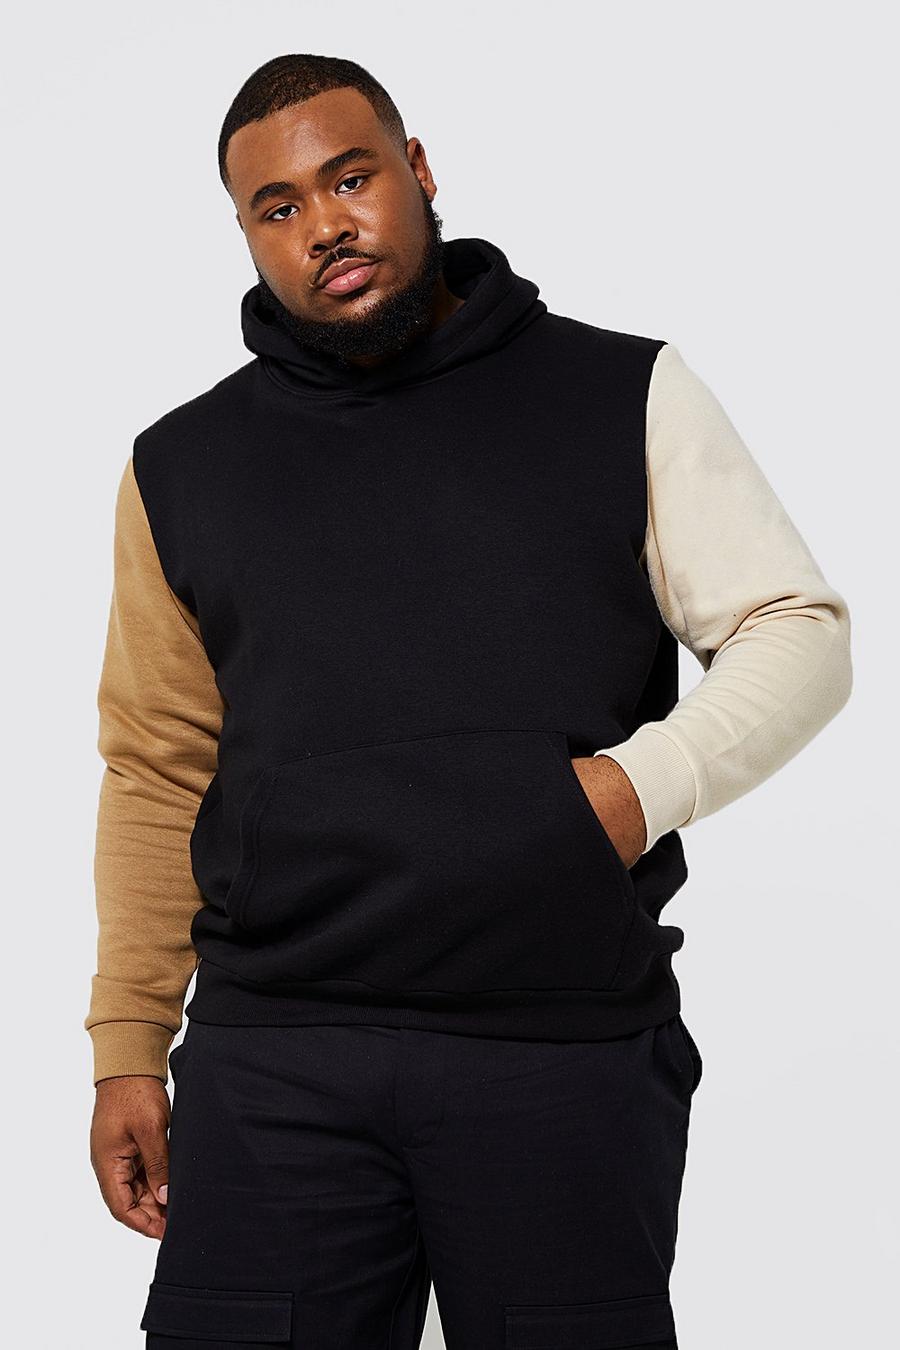 BOBOYU Mens Plus Size Fall & Winter Hoodie Loose Fit Longline Wool Blend Peacoat Jacket Outerwear